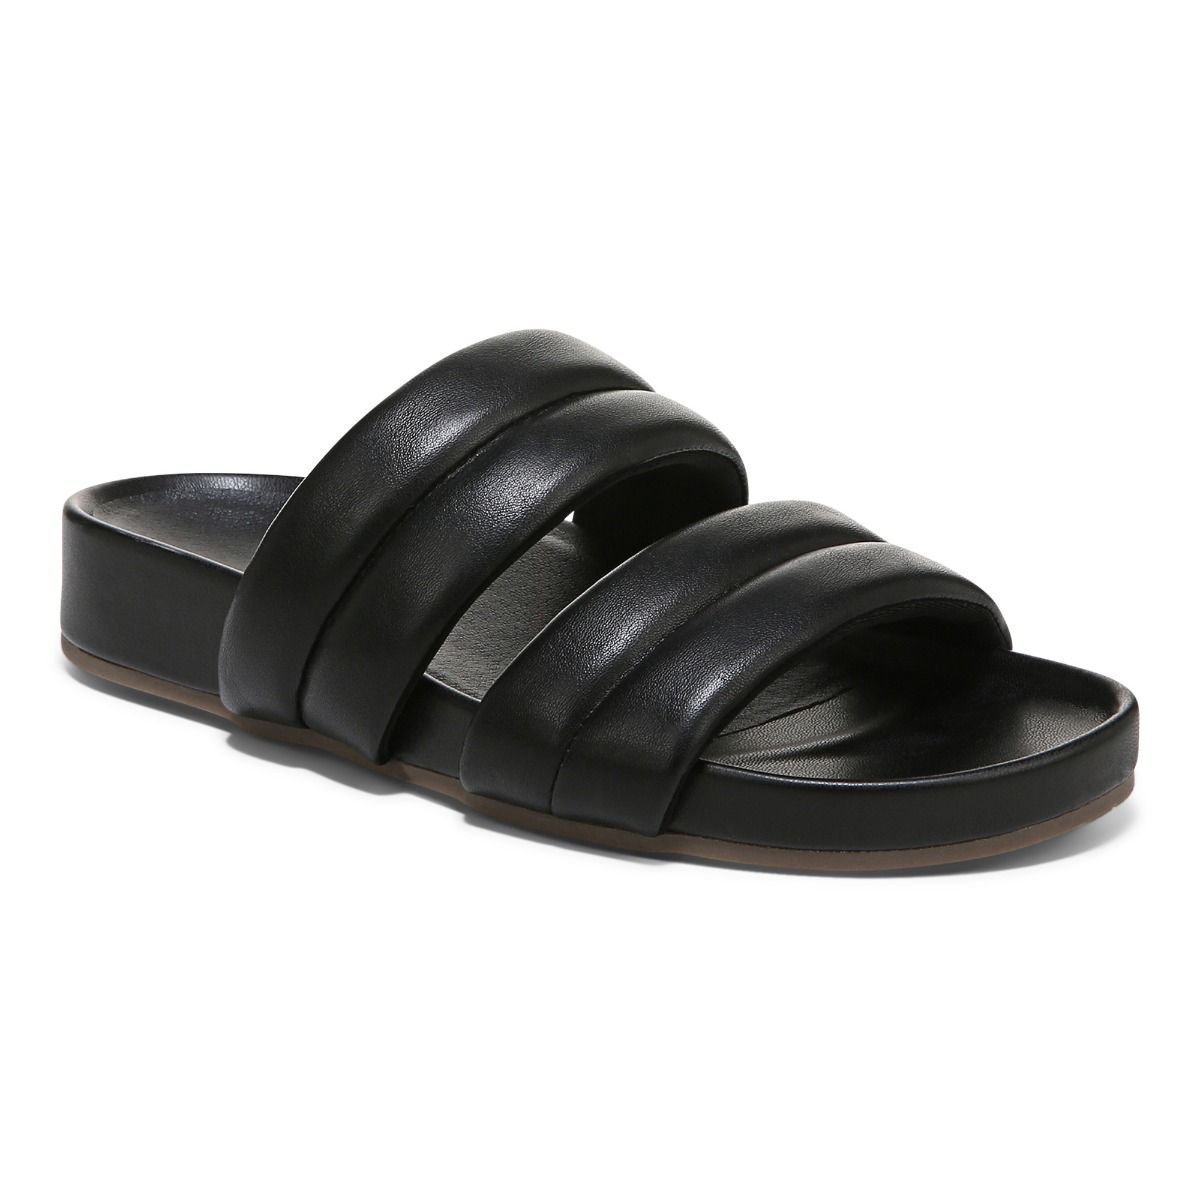 Black Mayla Slide Sandal by Vionic